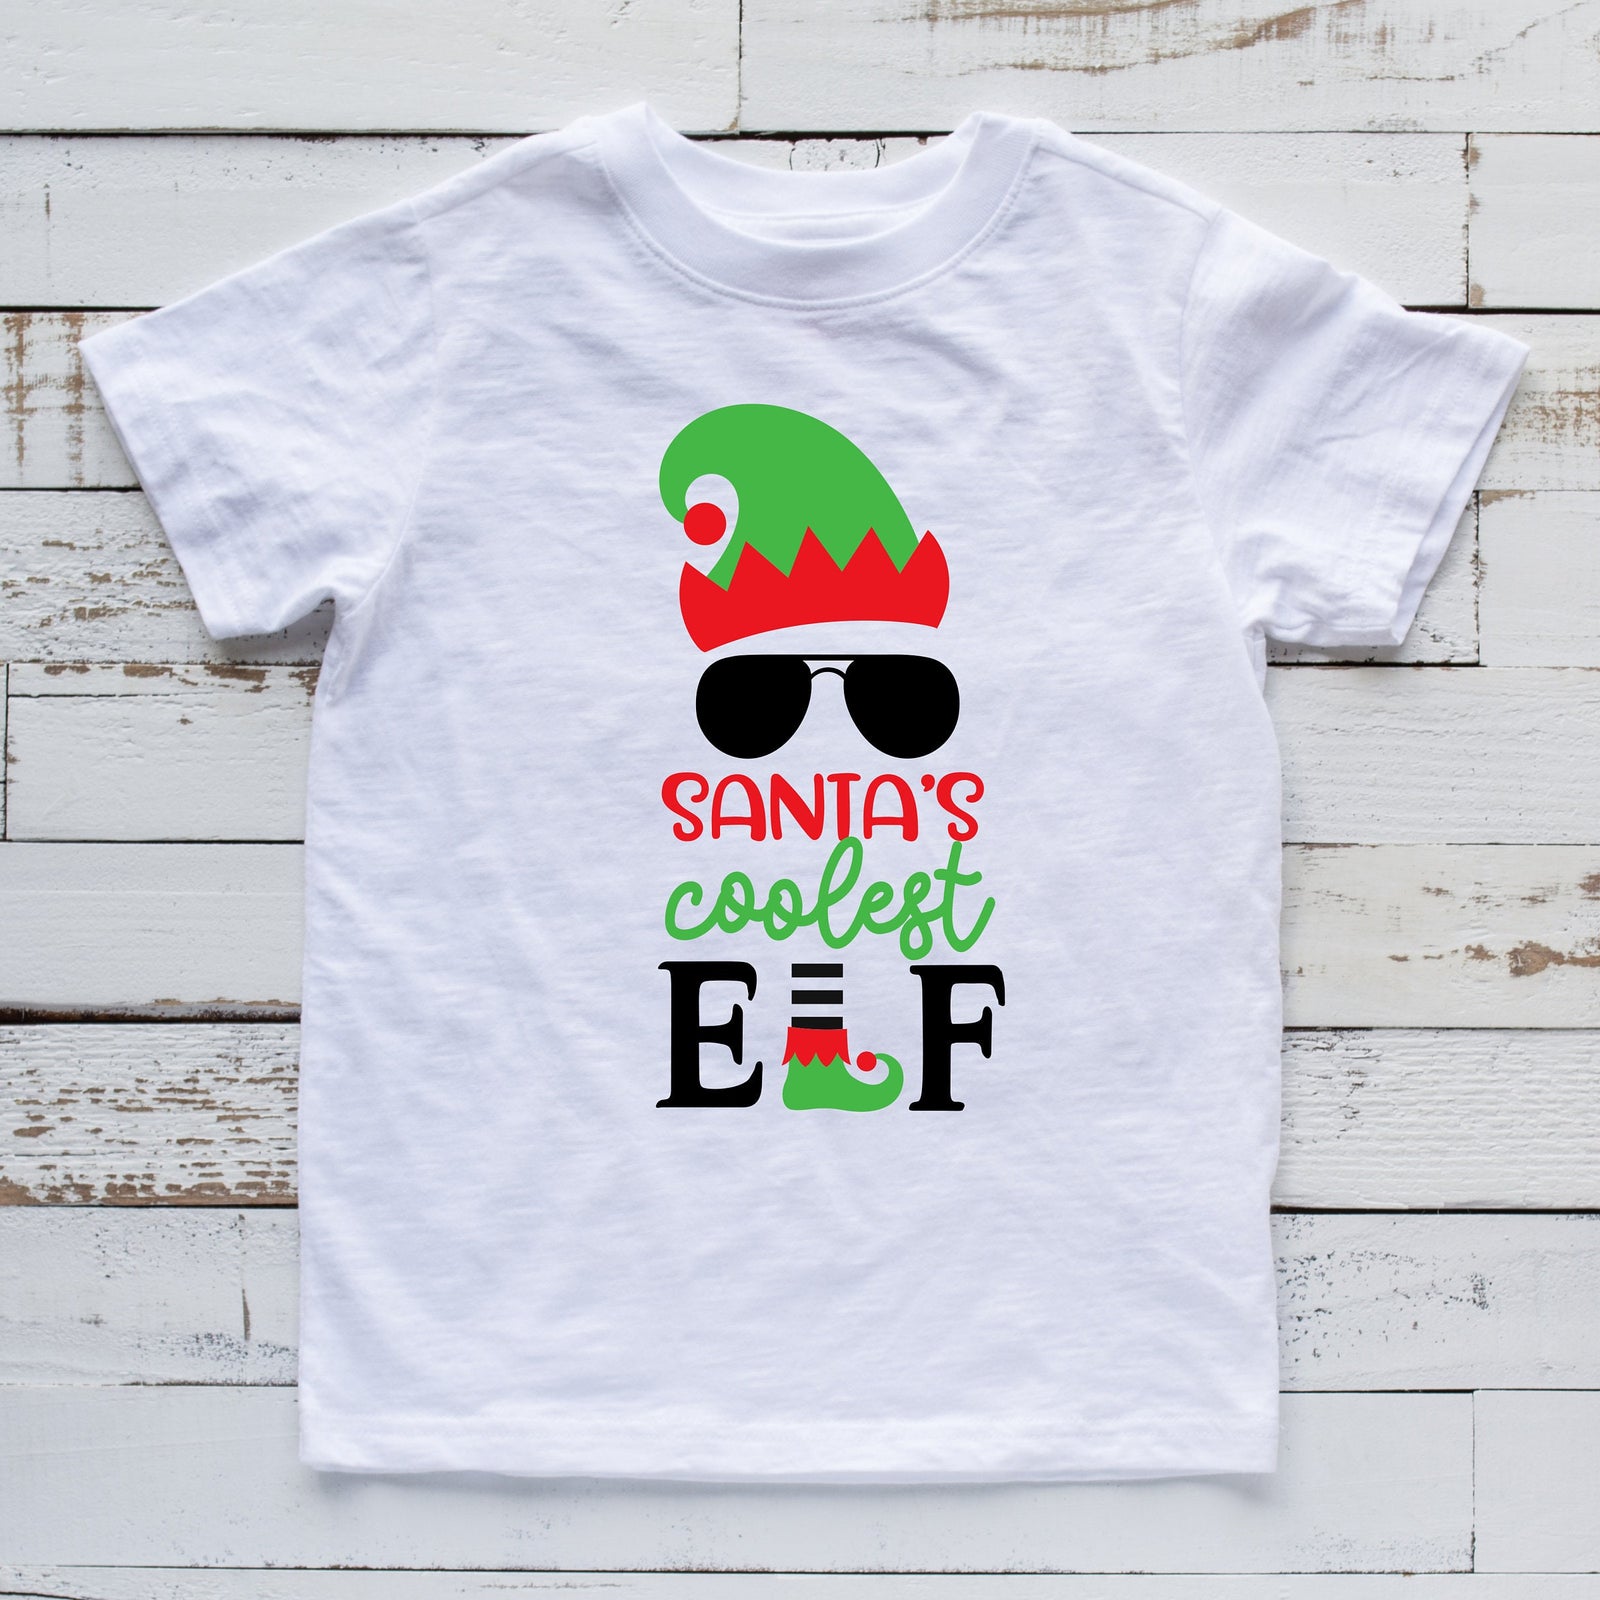 Santa's Coolest Elf Kids Christmas Shirt - Youth Funny Christmas Elf Shirt - Cool Elf with Aviator Sunglasses Holiday Shirt